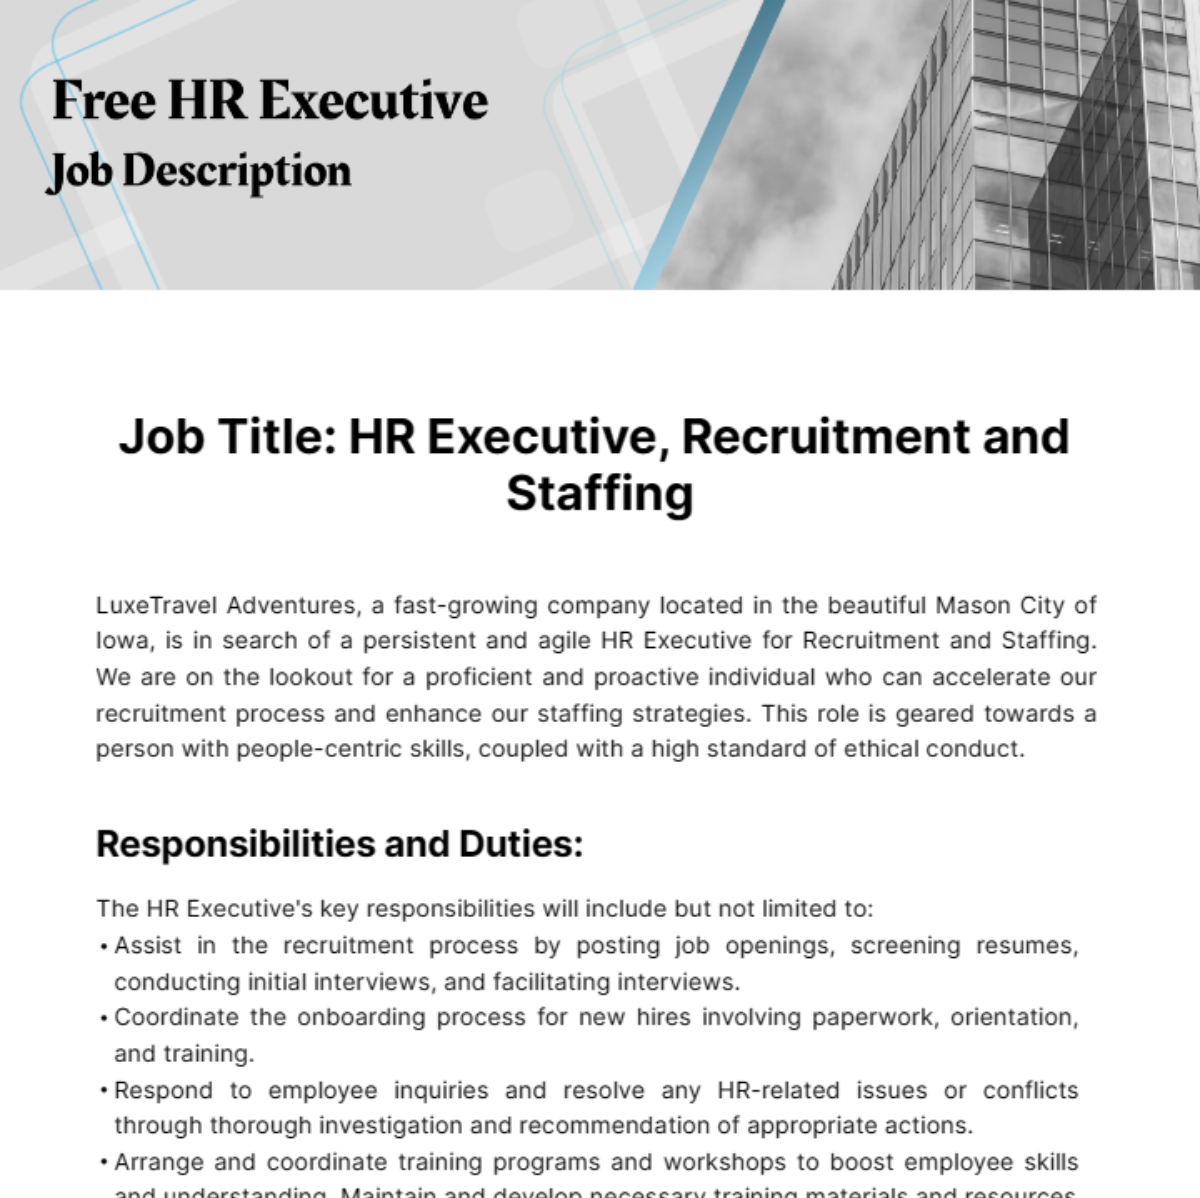 Free HR Executive Job Description Template